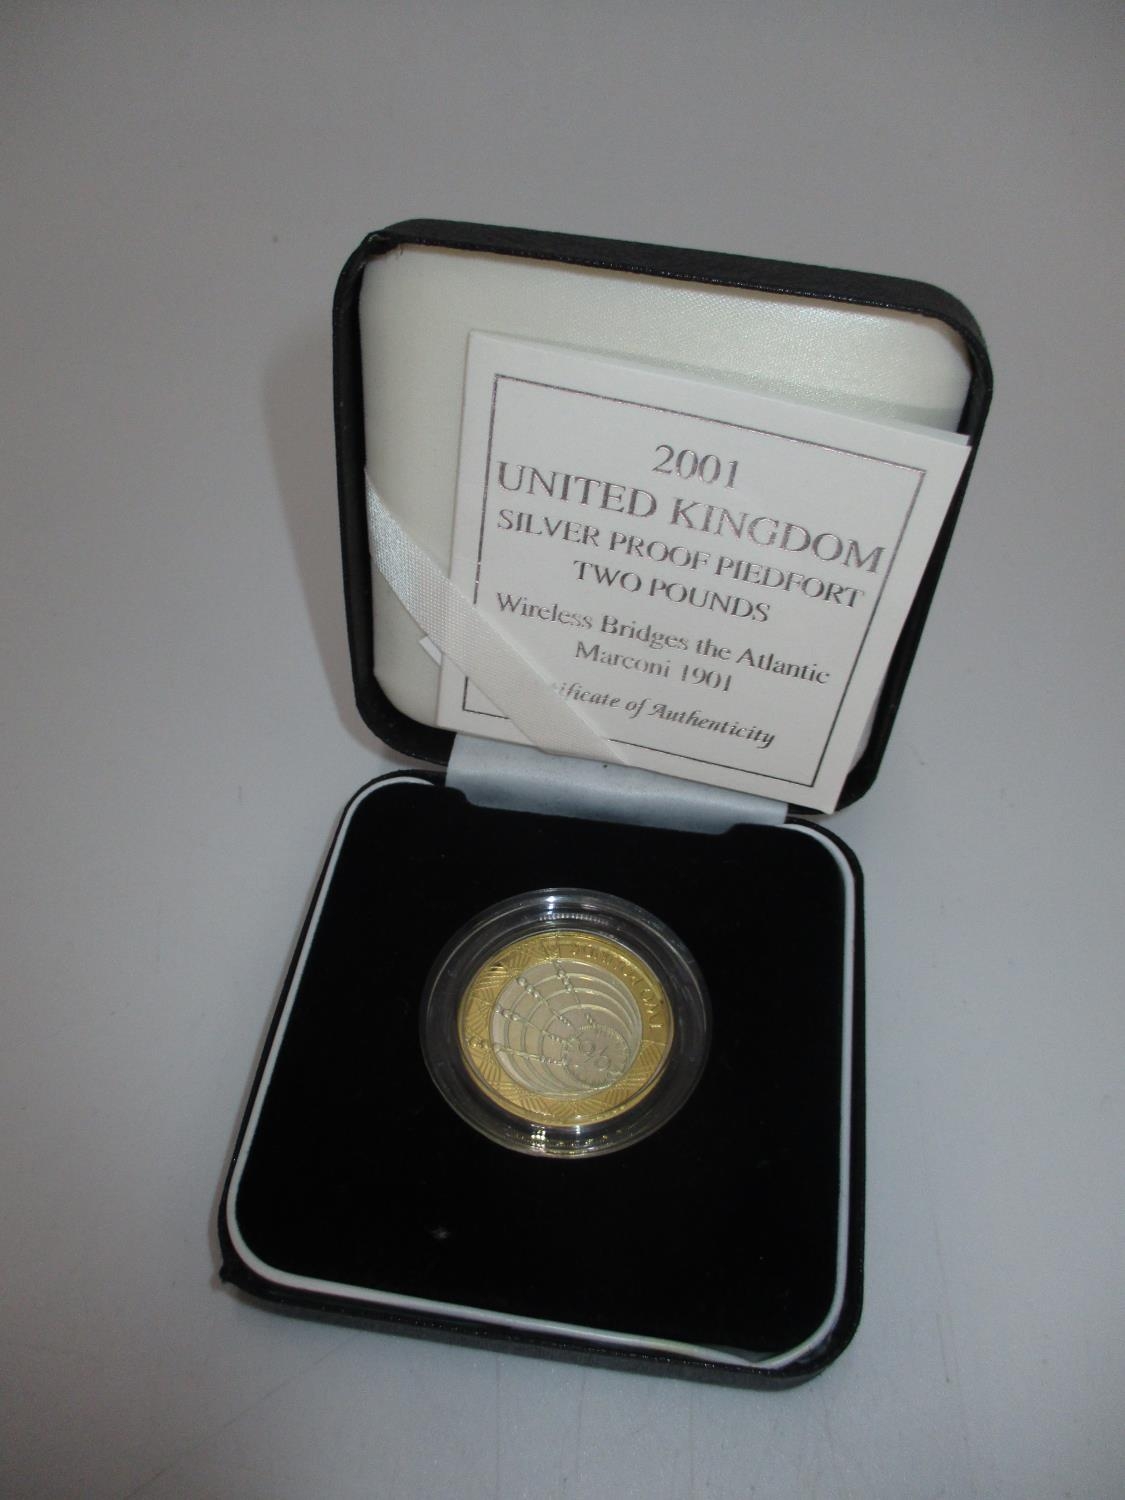 Royal Mint 2001 UK Silver Proof Piedfort Two Pounds Wireless Bridges The Atlantic Marconi 1901